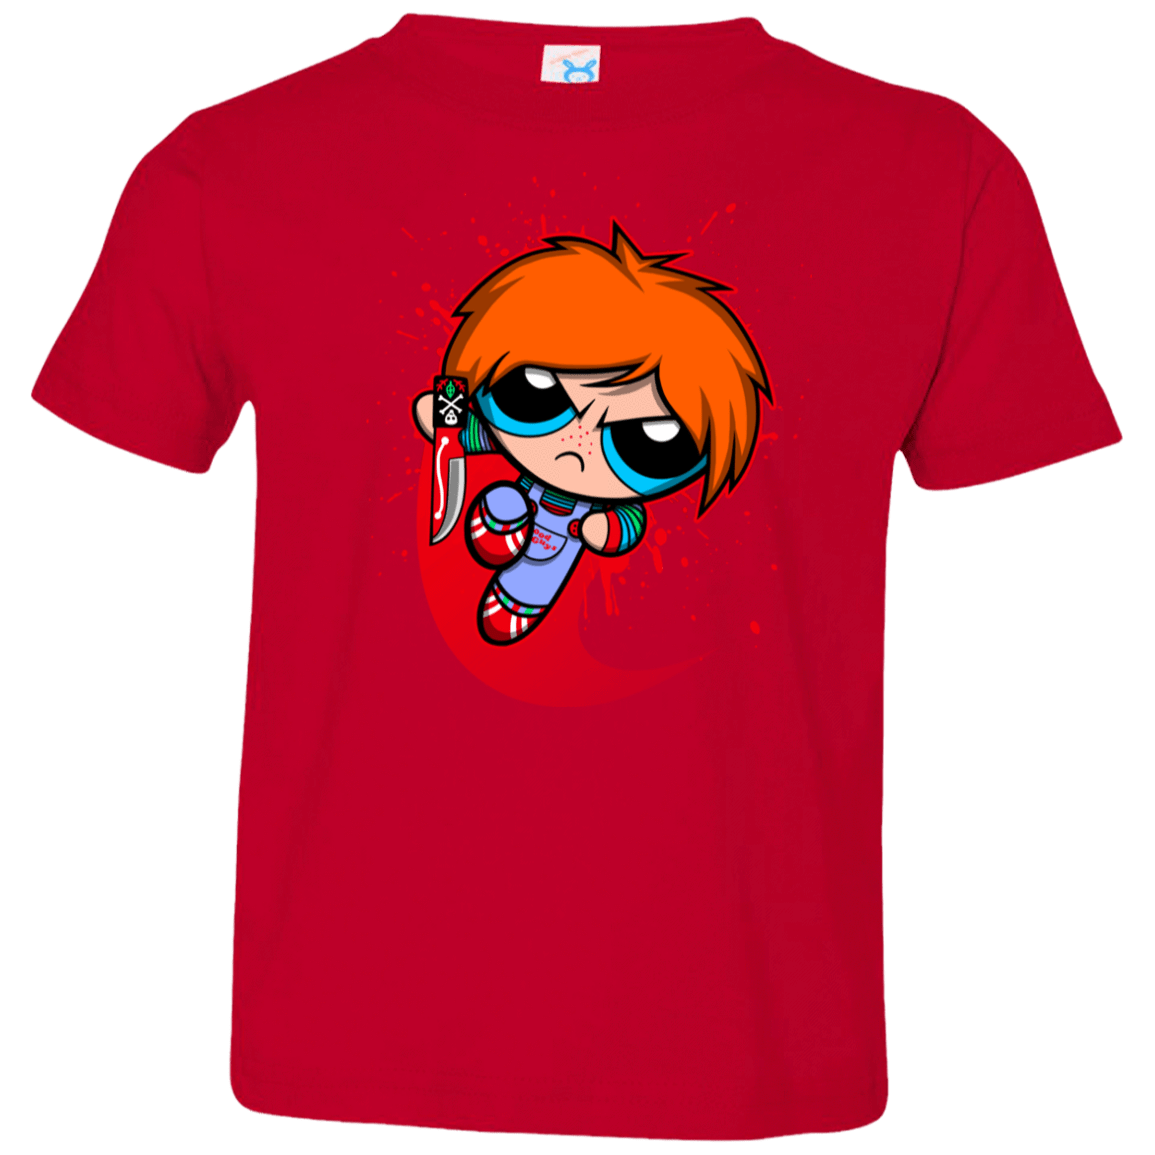 T-Shirts Red / 2T Powerchuck Toy Toddler Premium T-Shirt